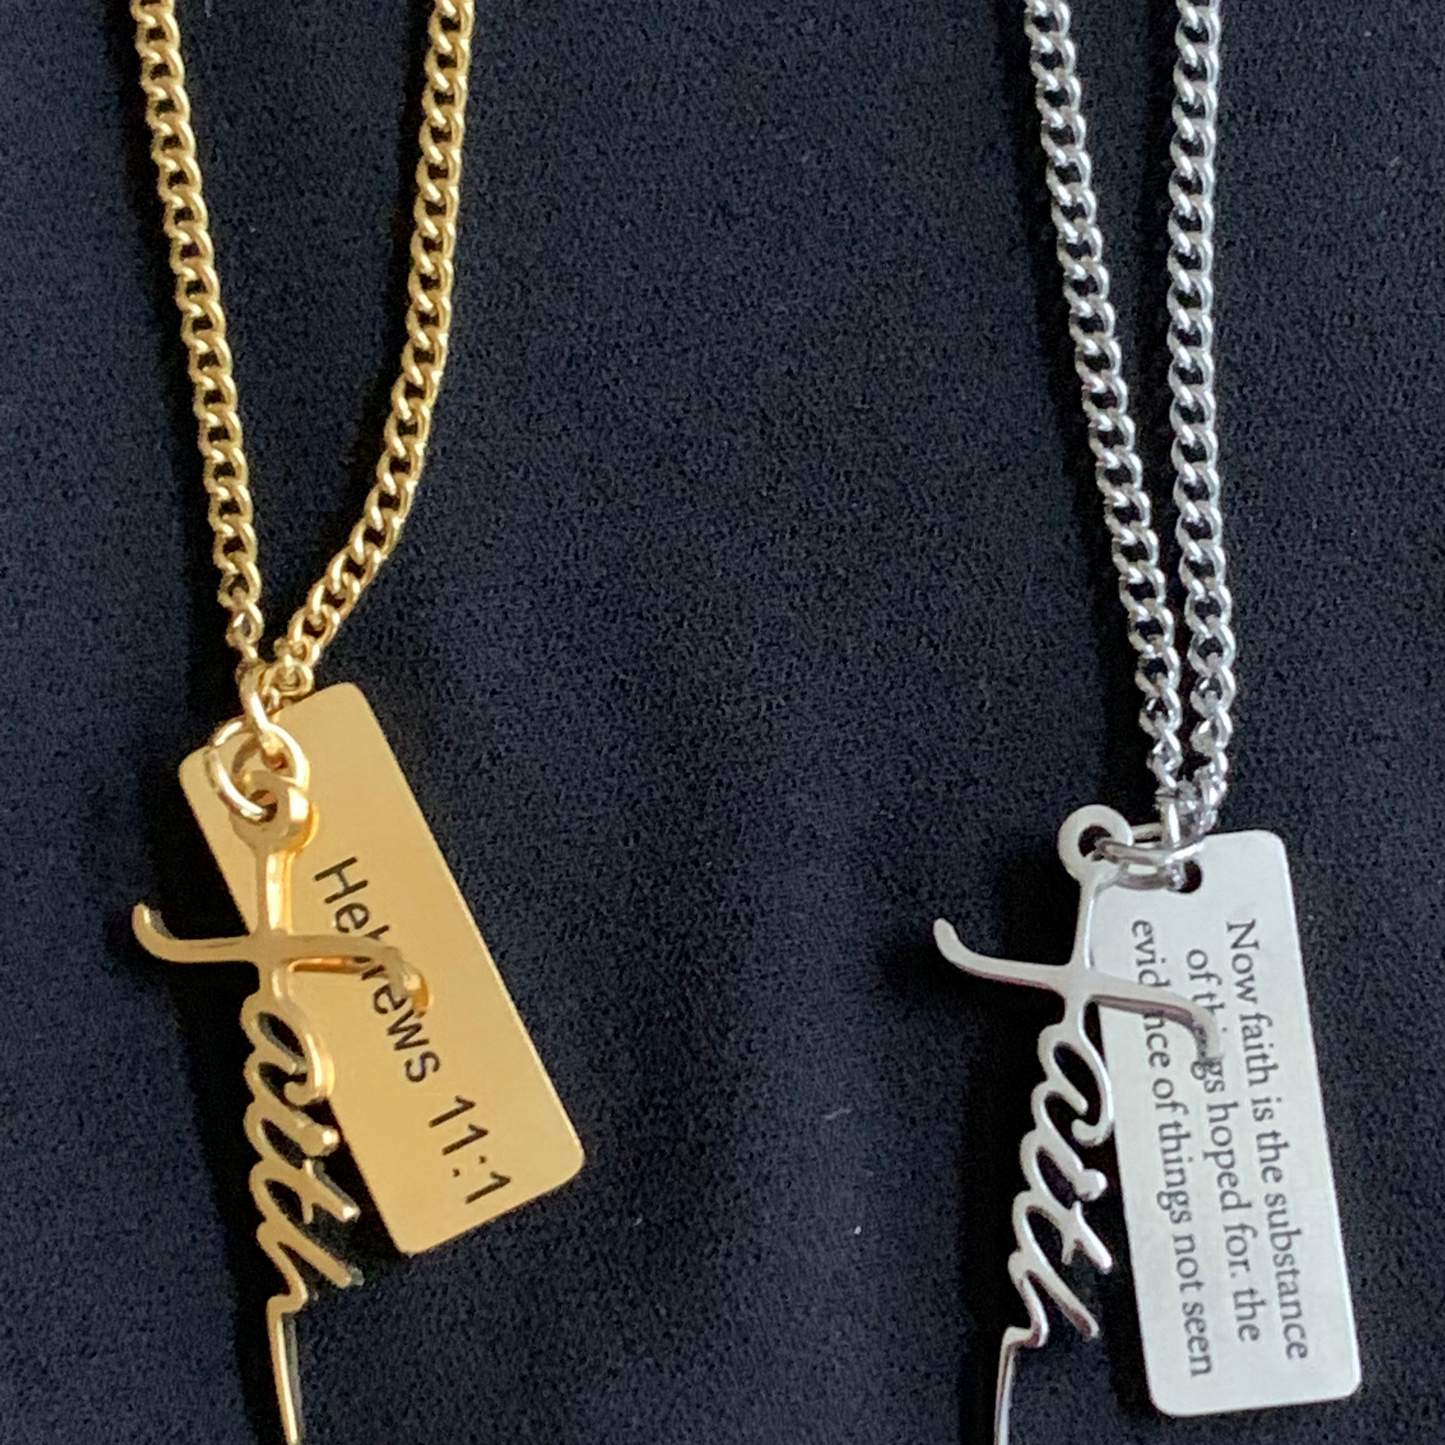 Faith Cross Necklace with verse pendant